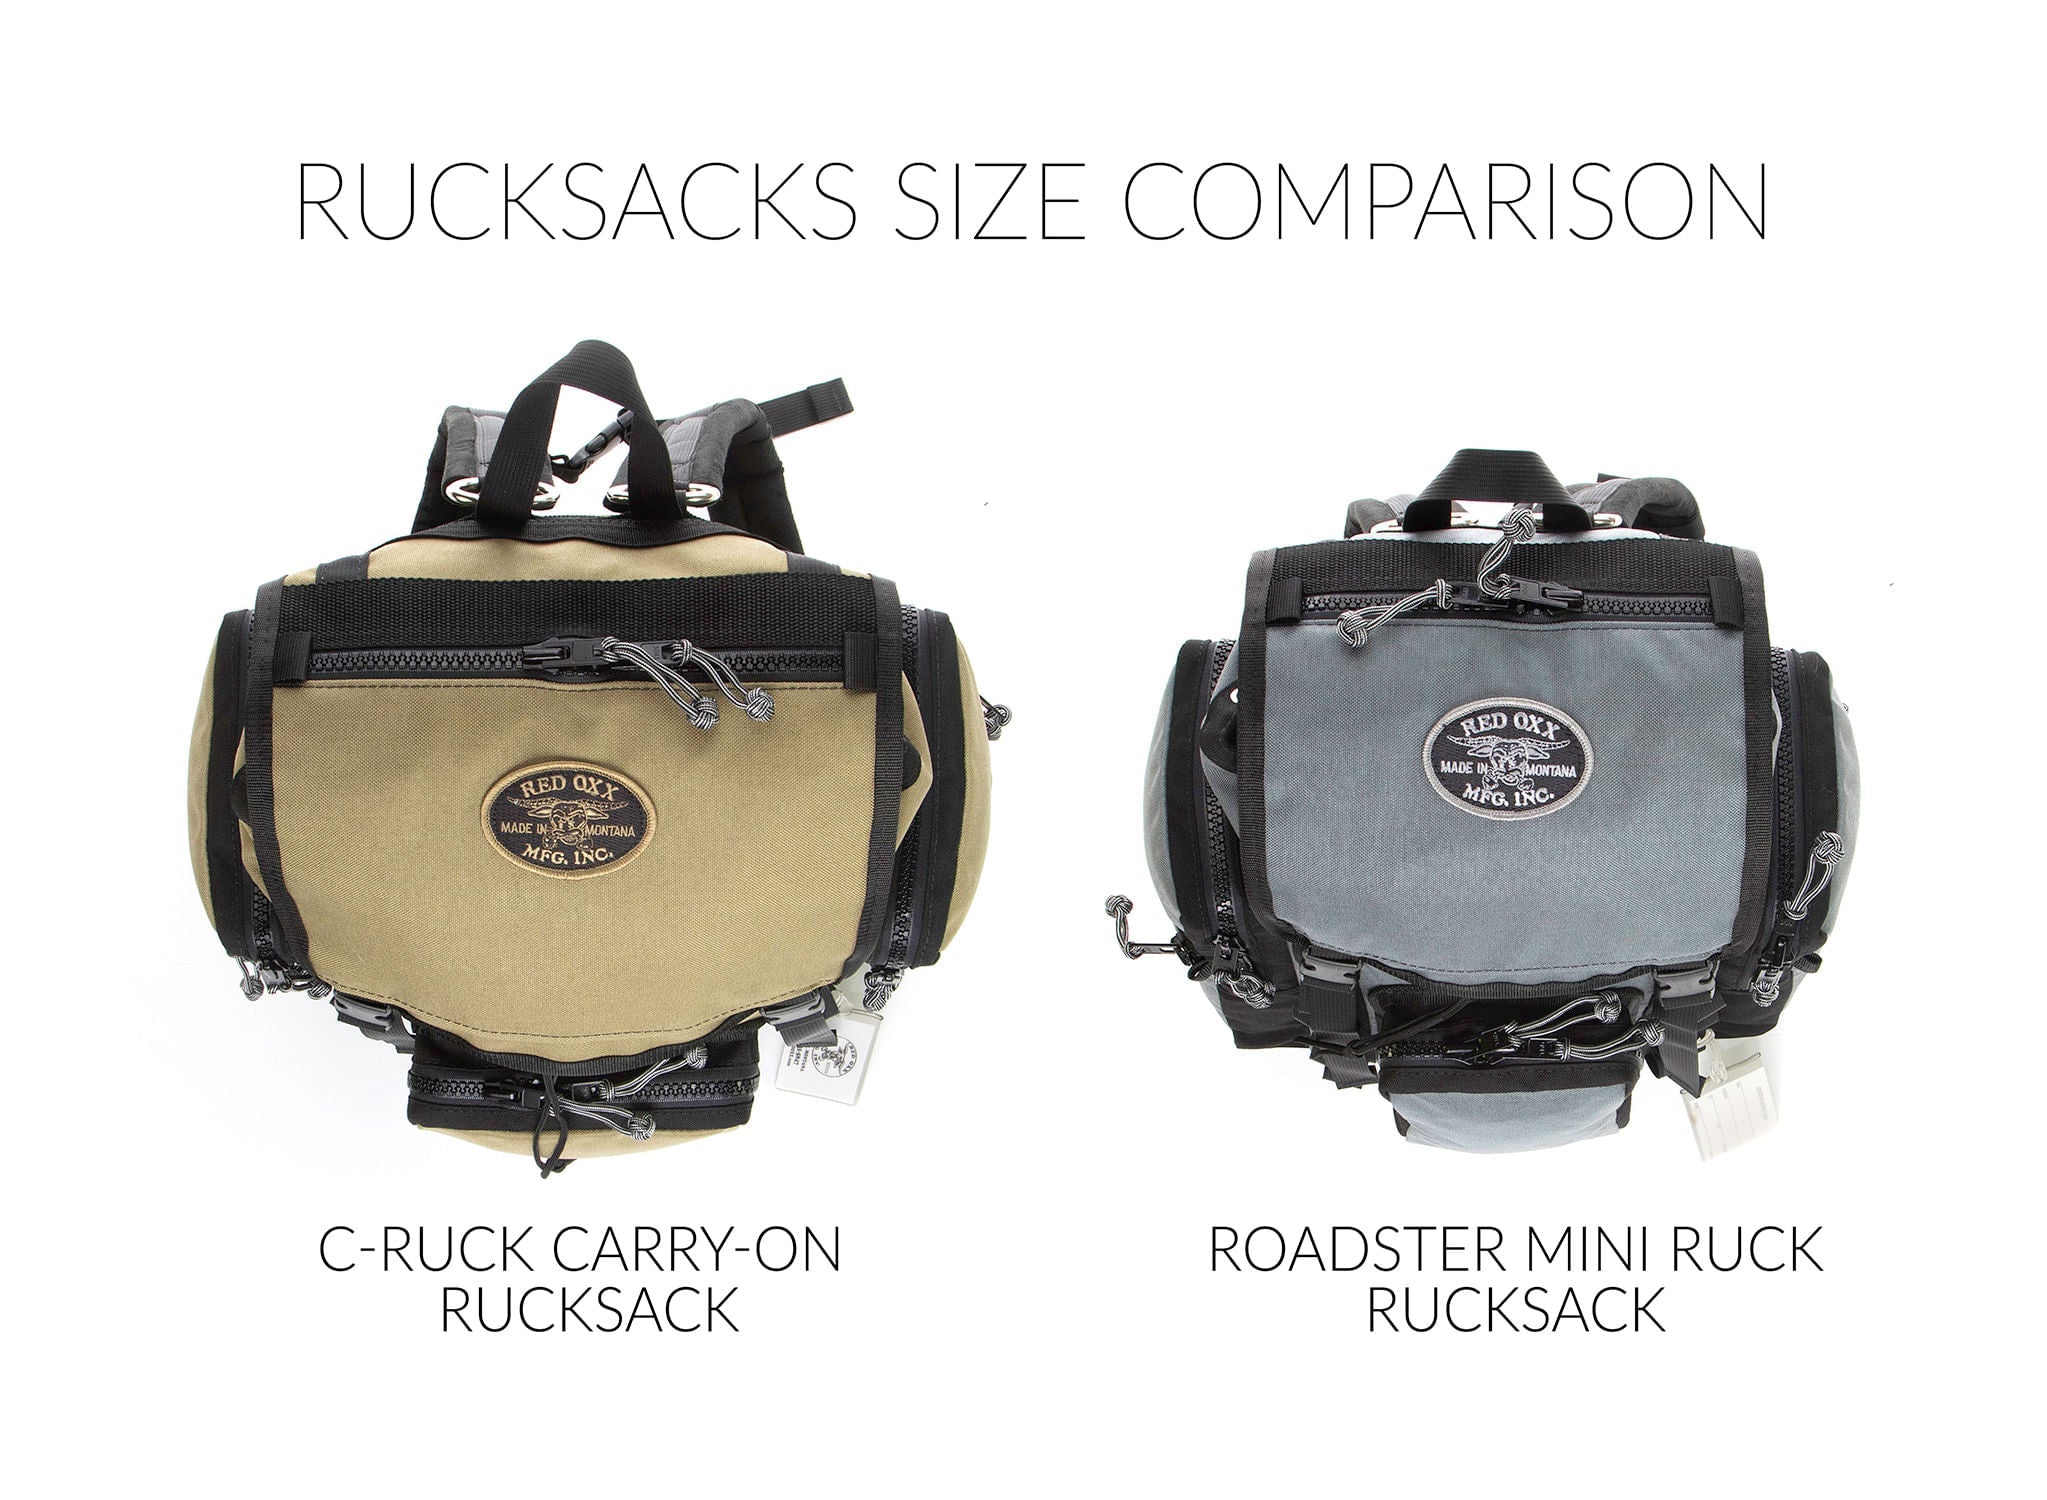 C-ruck Carry-on Rucksack